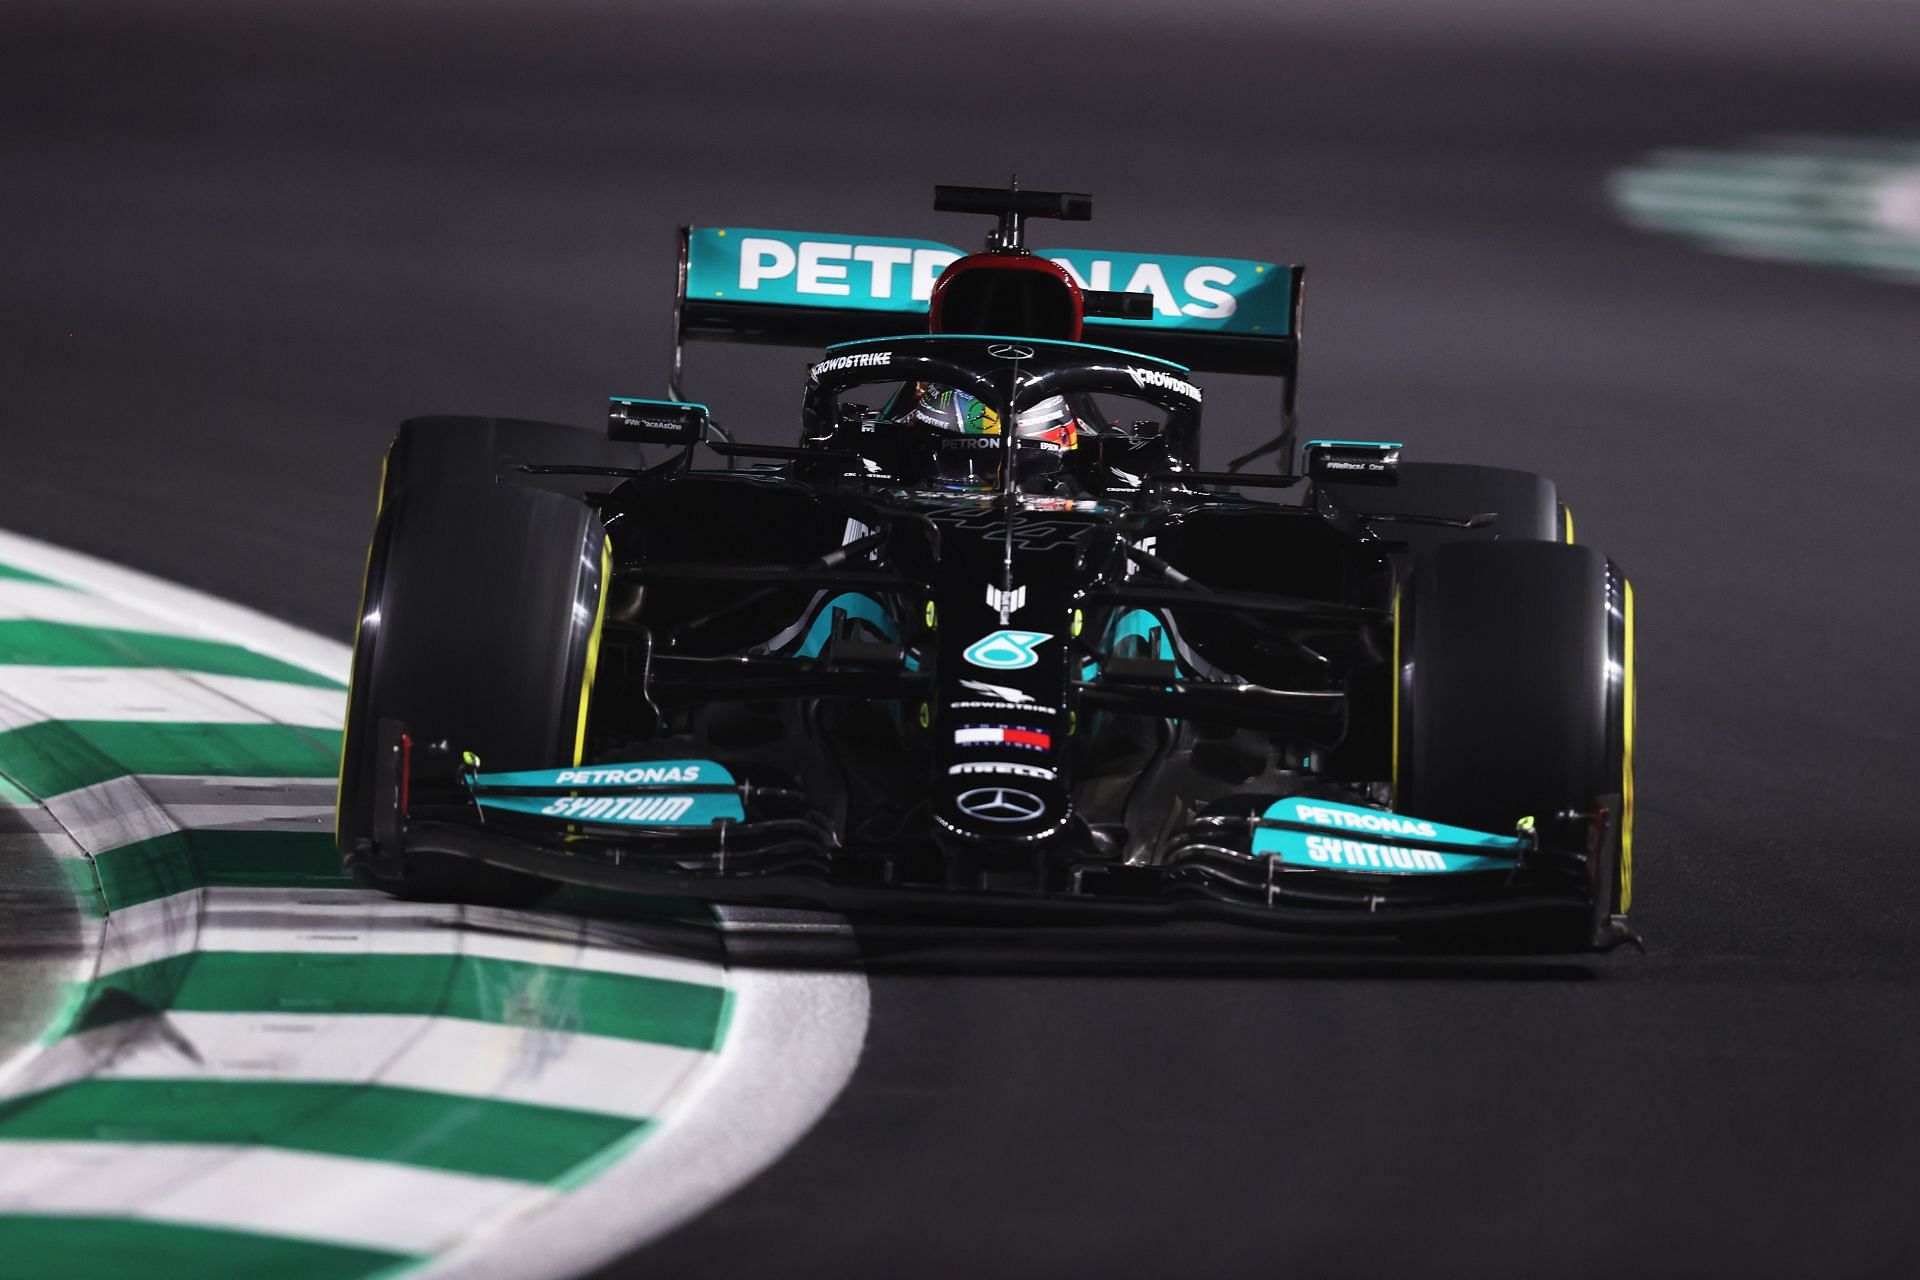 F1 Grand Prix of Saudi Arabia - Lewis Hamilton takes a fast right-hander during FP2.